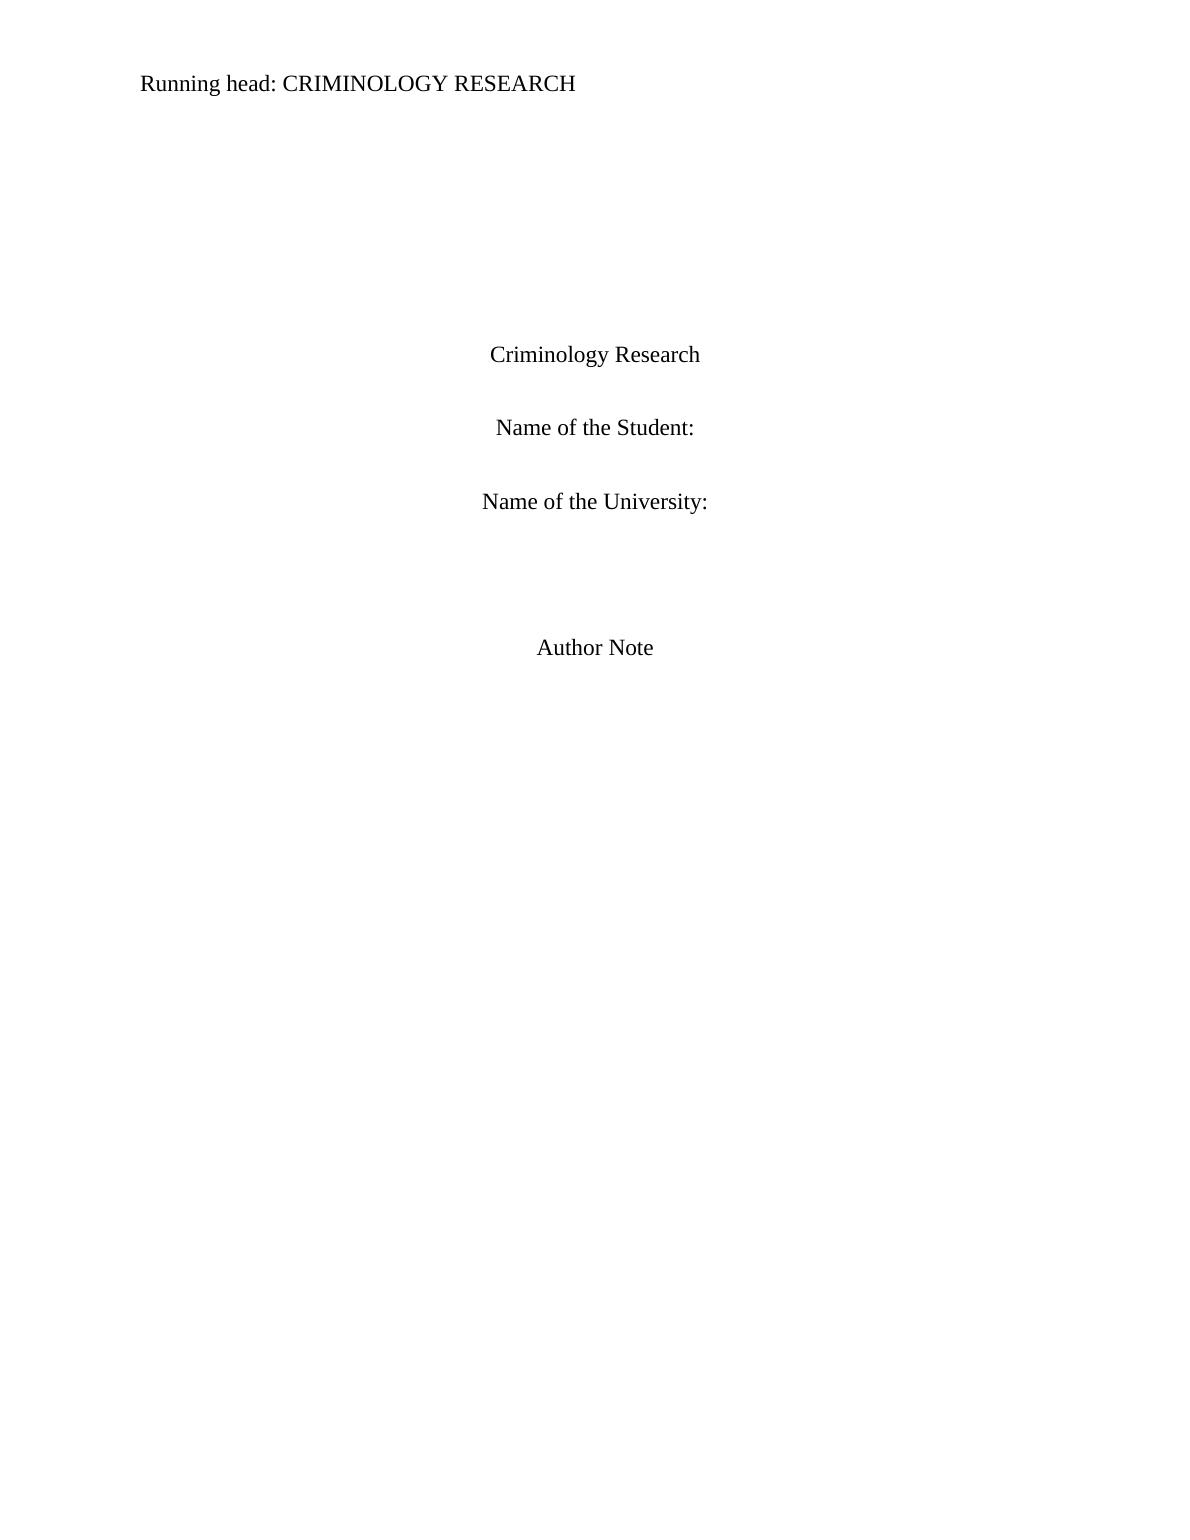 Research on Criminology pdf_1